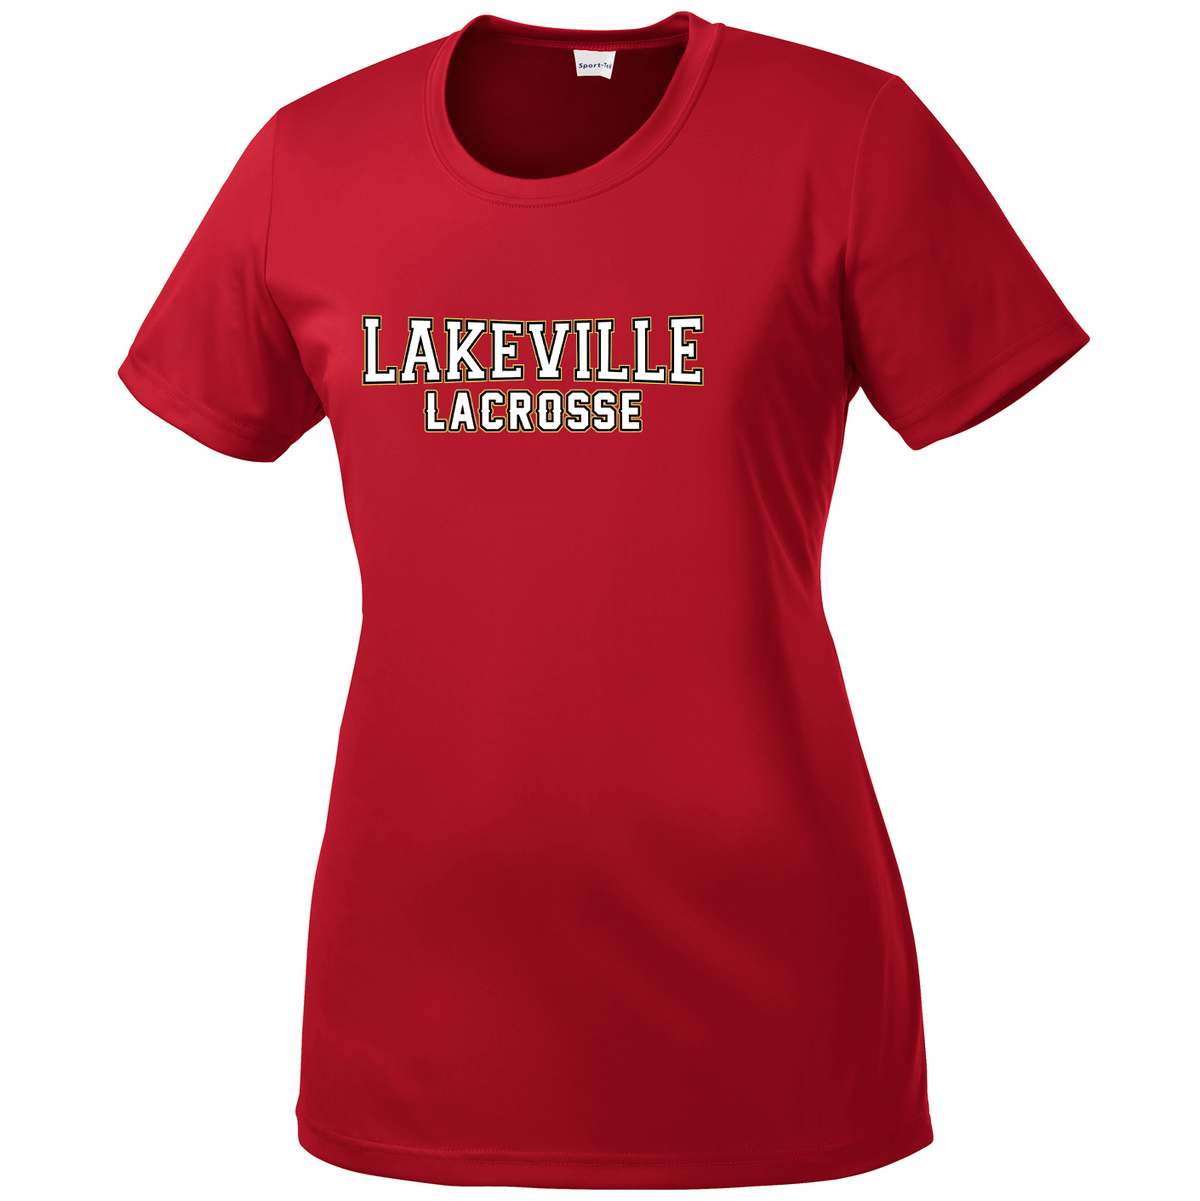 Lakeville Lacrosse Women's Performance Tee